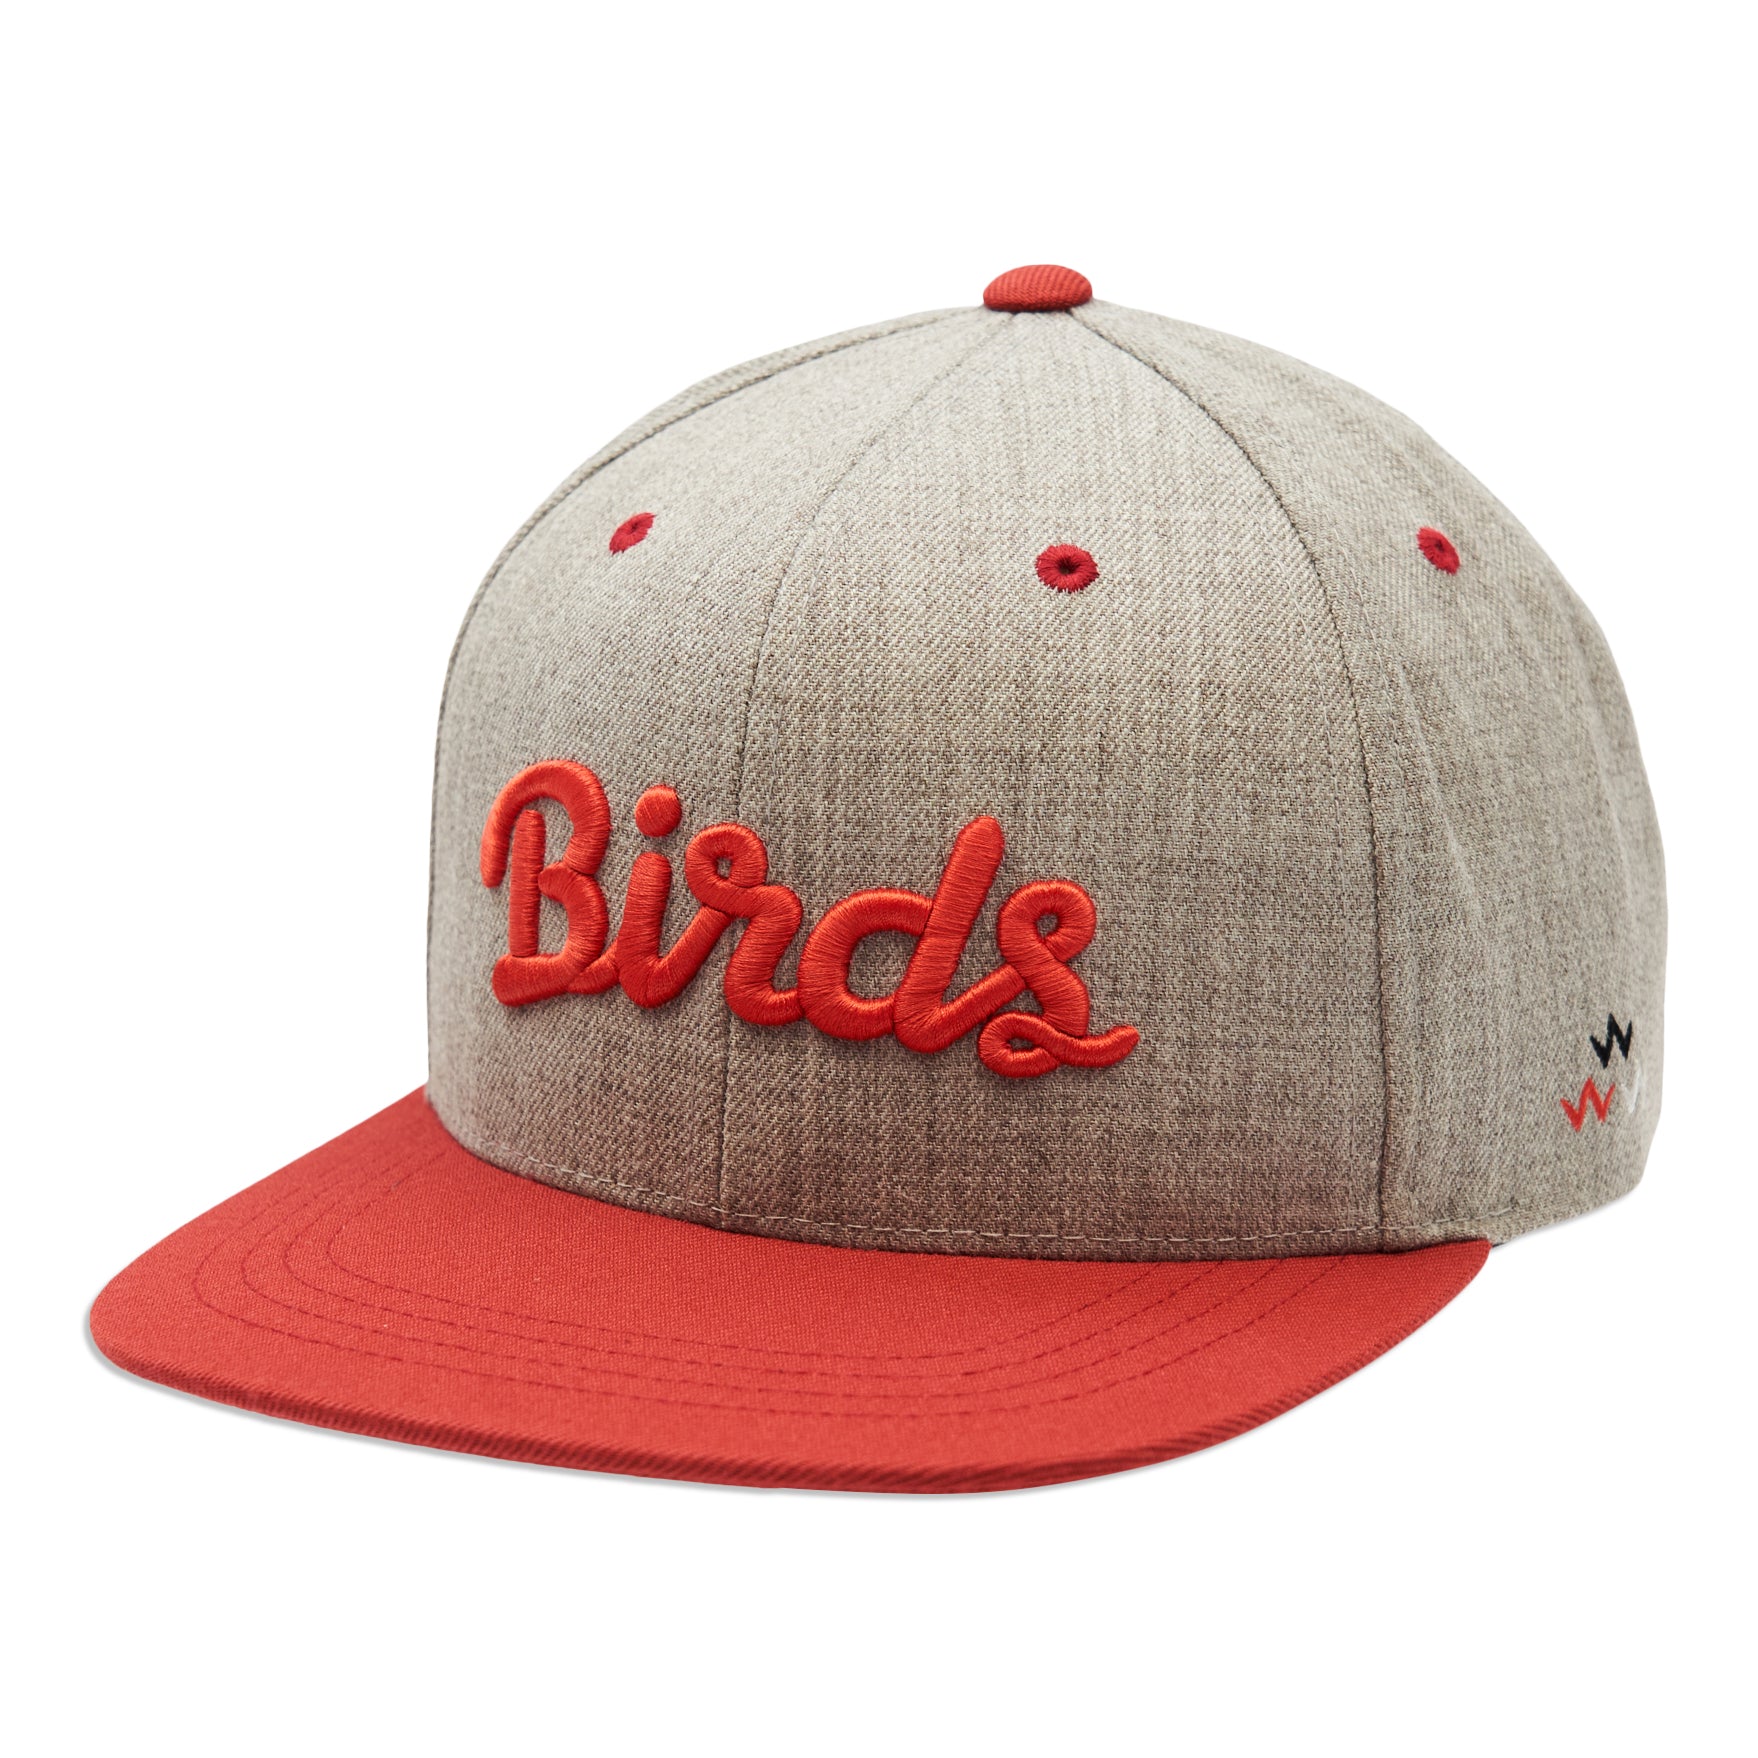    birds-of-condor-grey-marle-red-flat-peak-snapback-hat-front